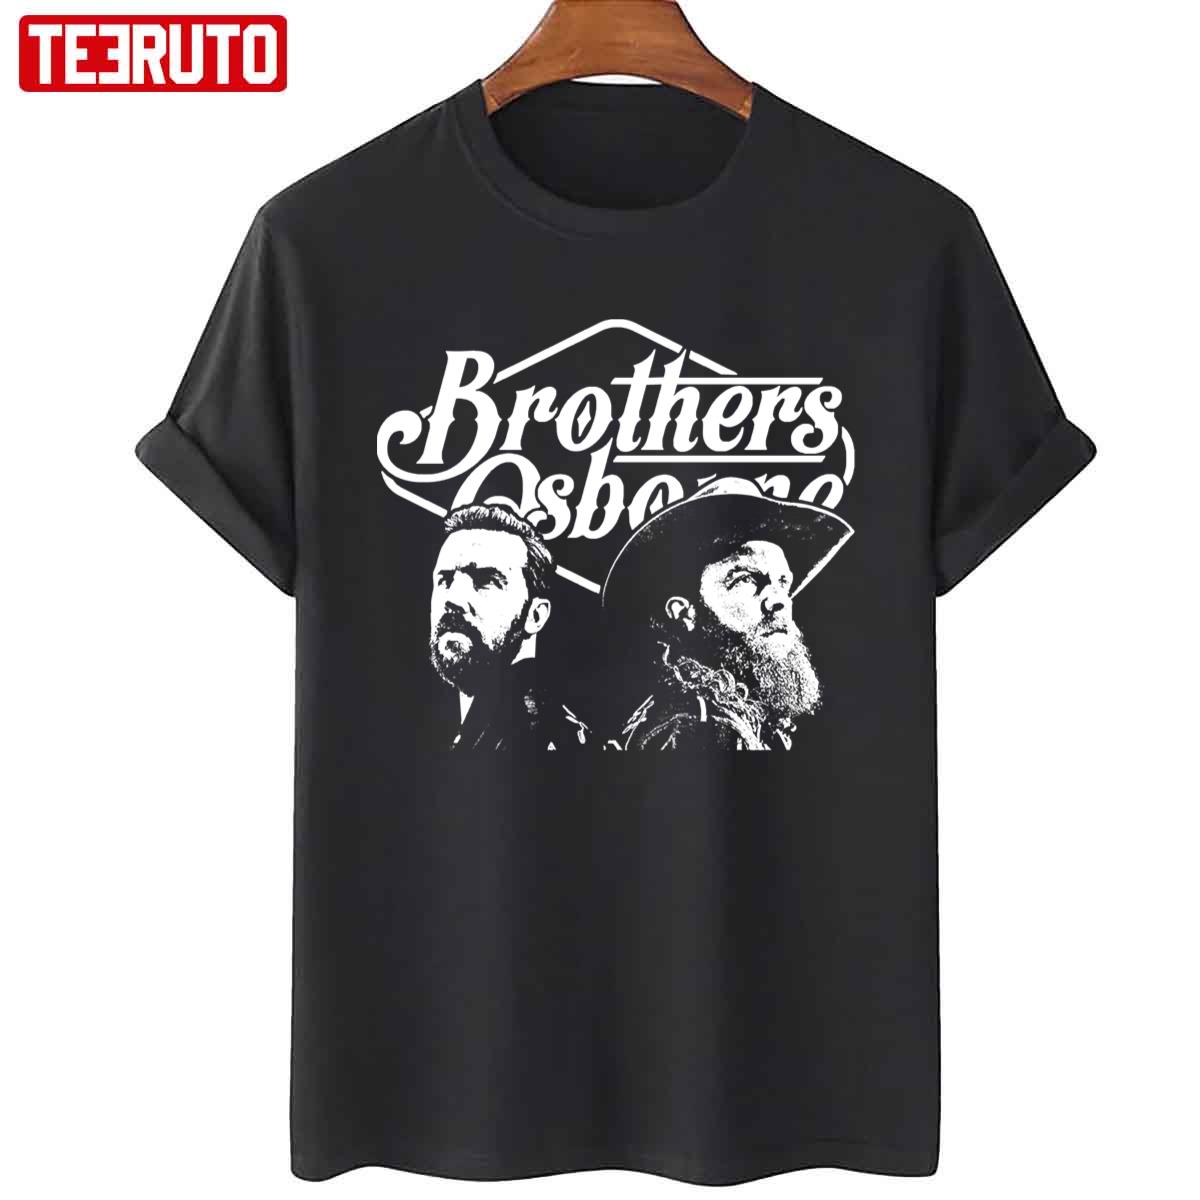 Brothers Osborne Country Music Unisex T-Shirt